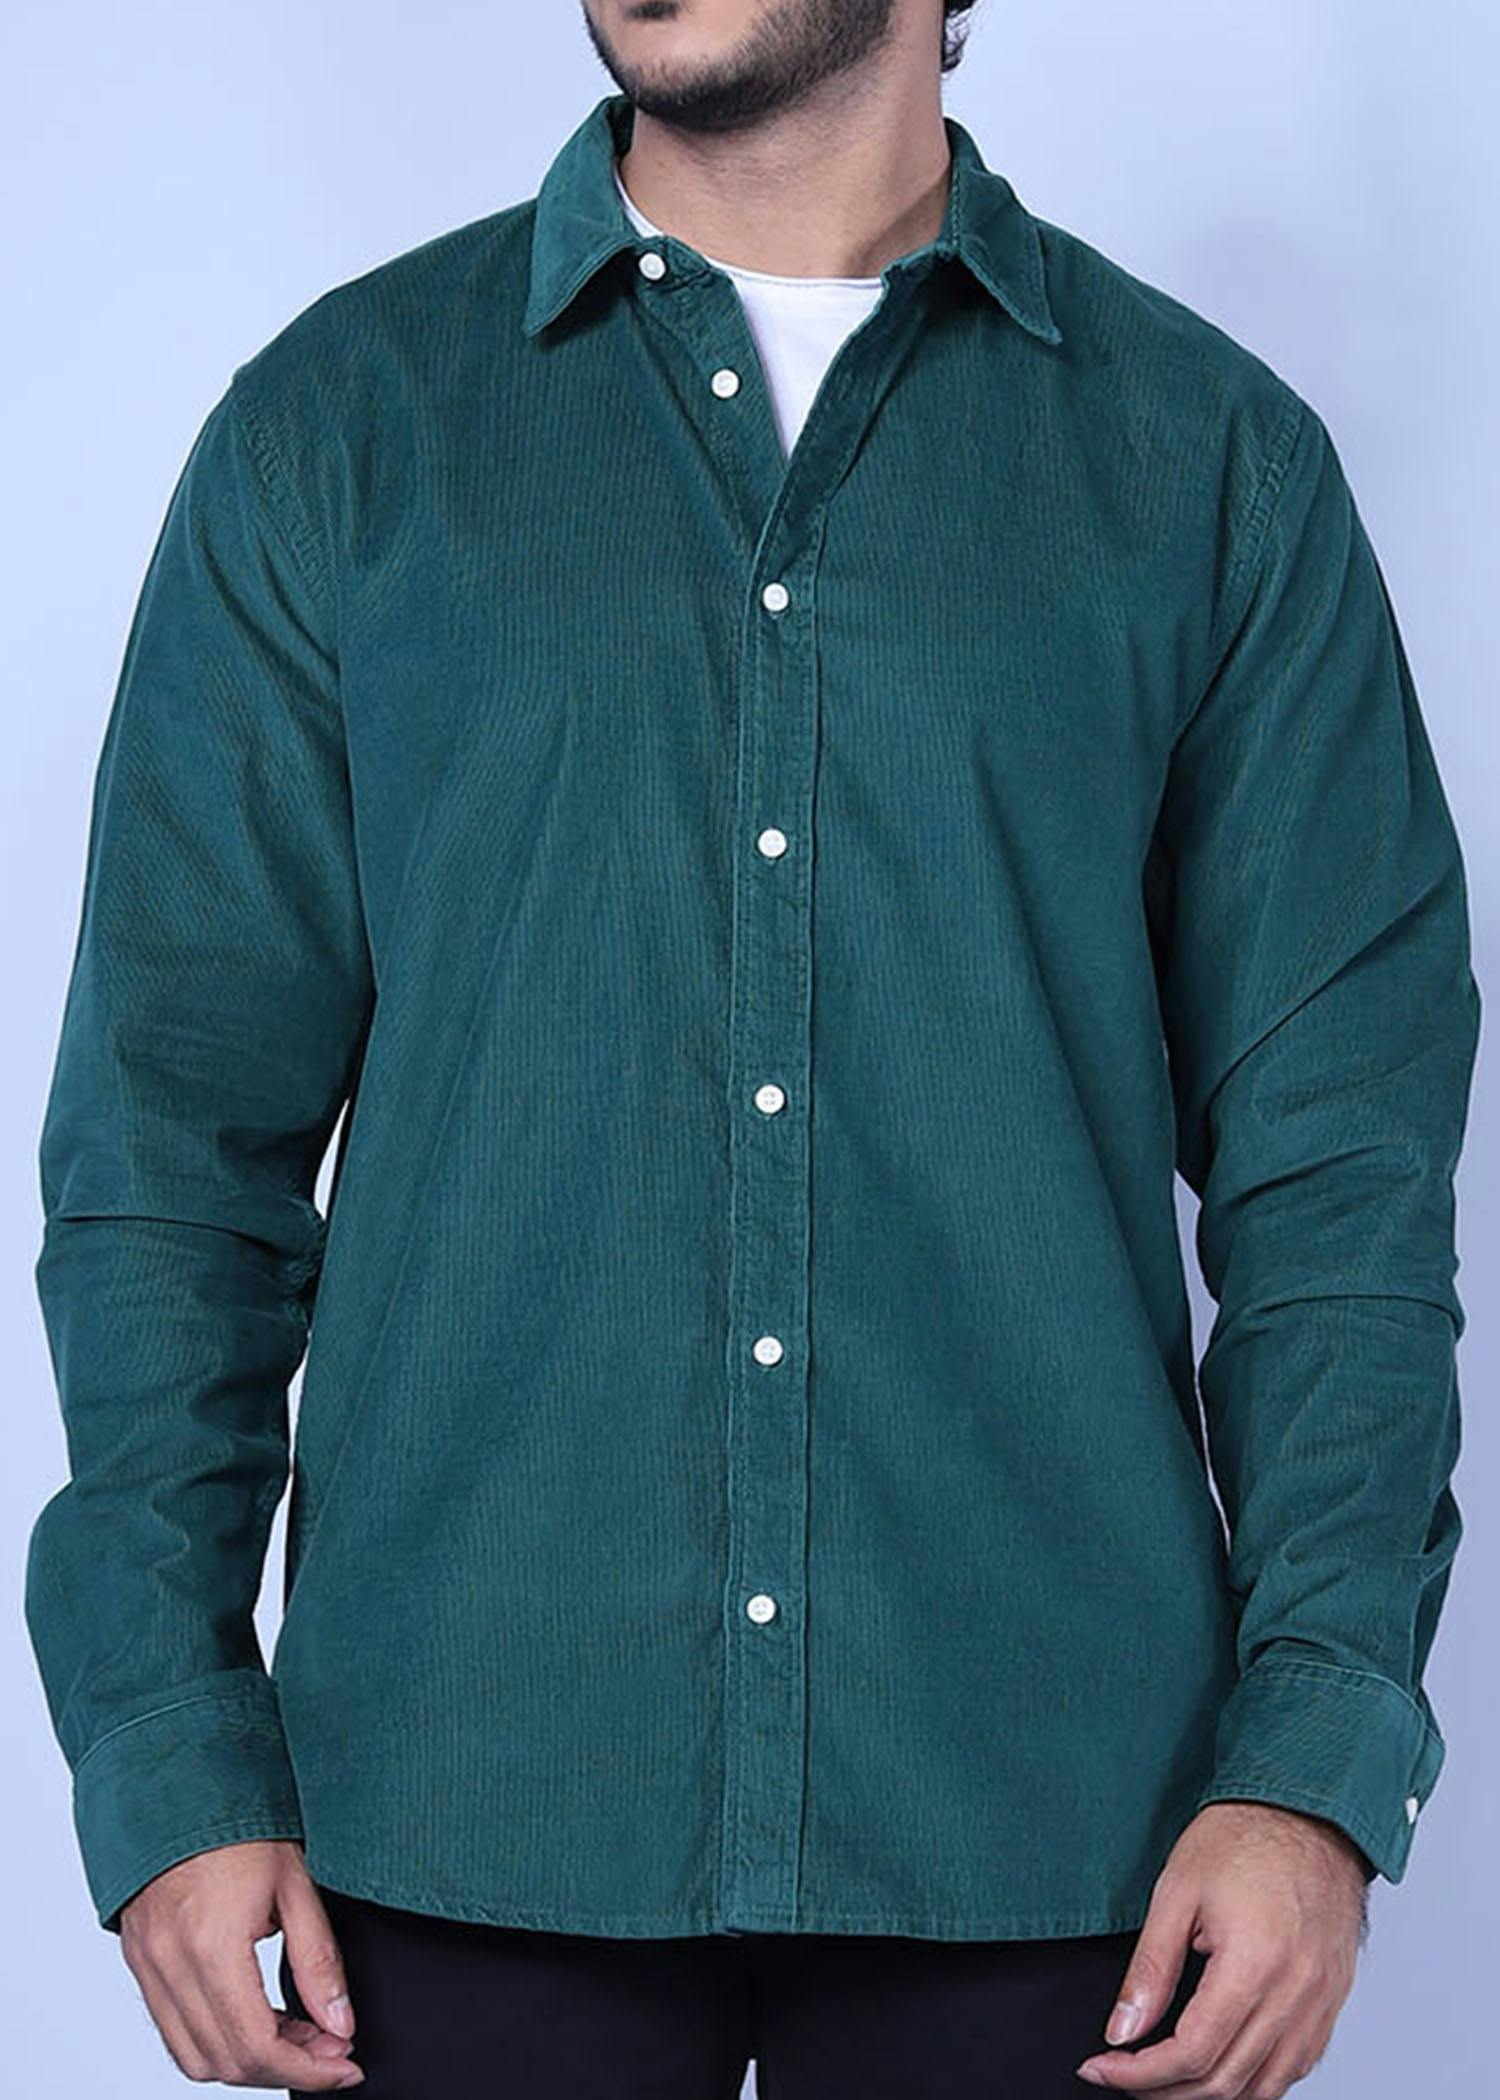 beijing i corduroy shirt green color headcropped